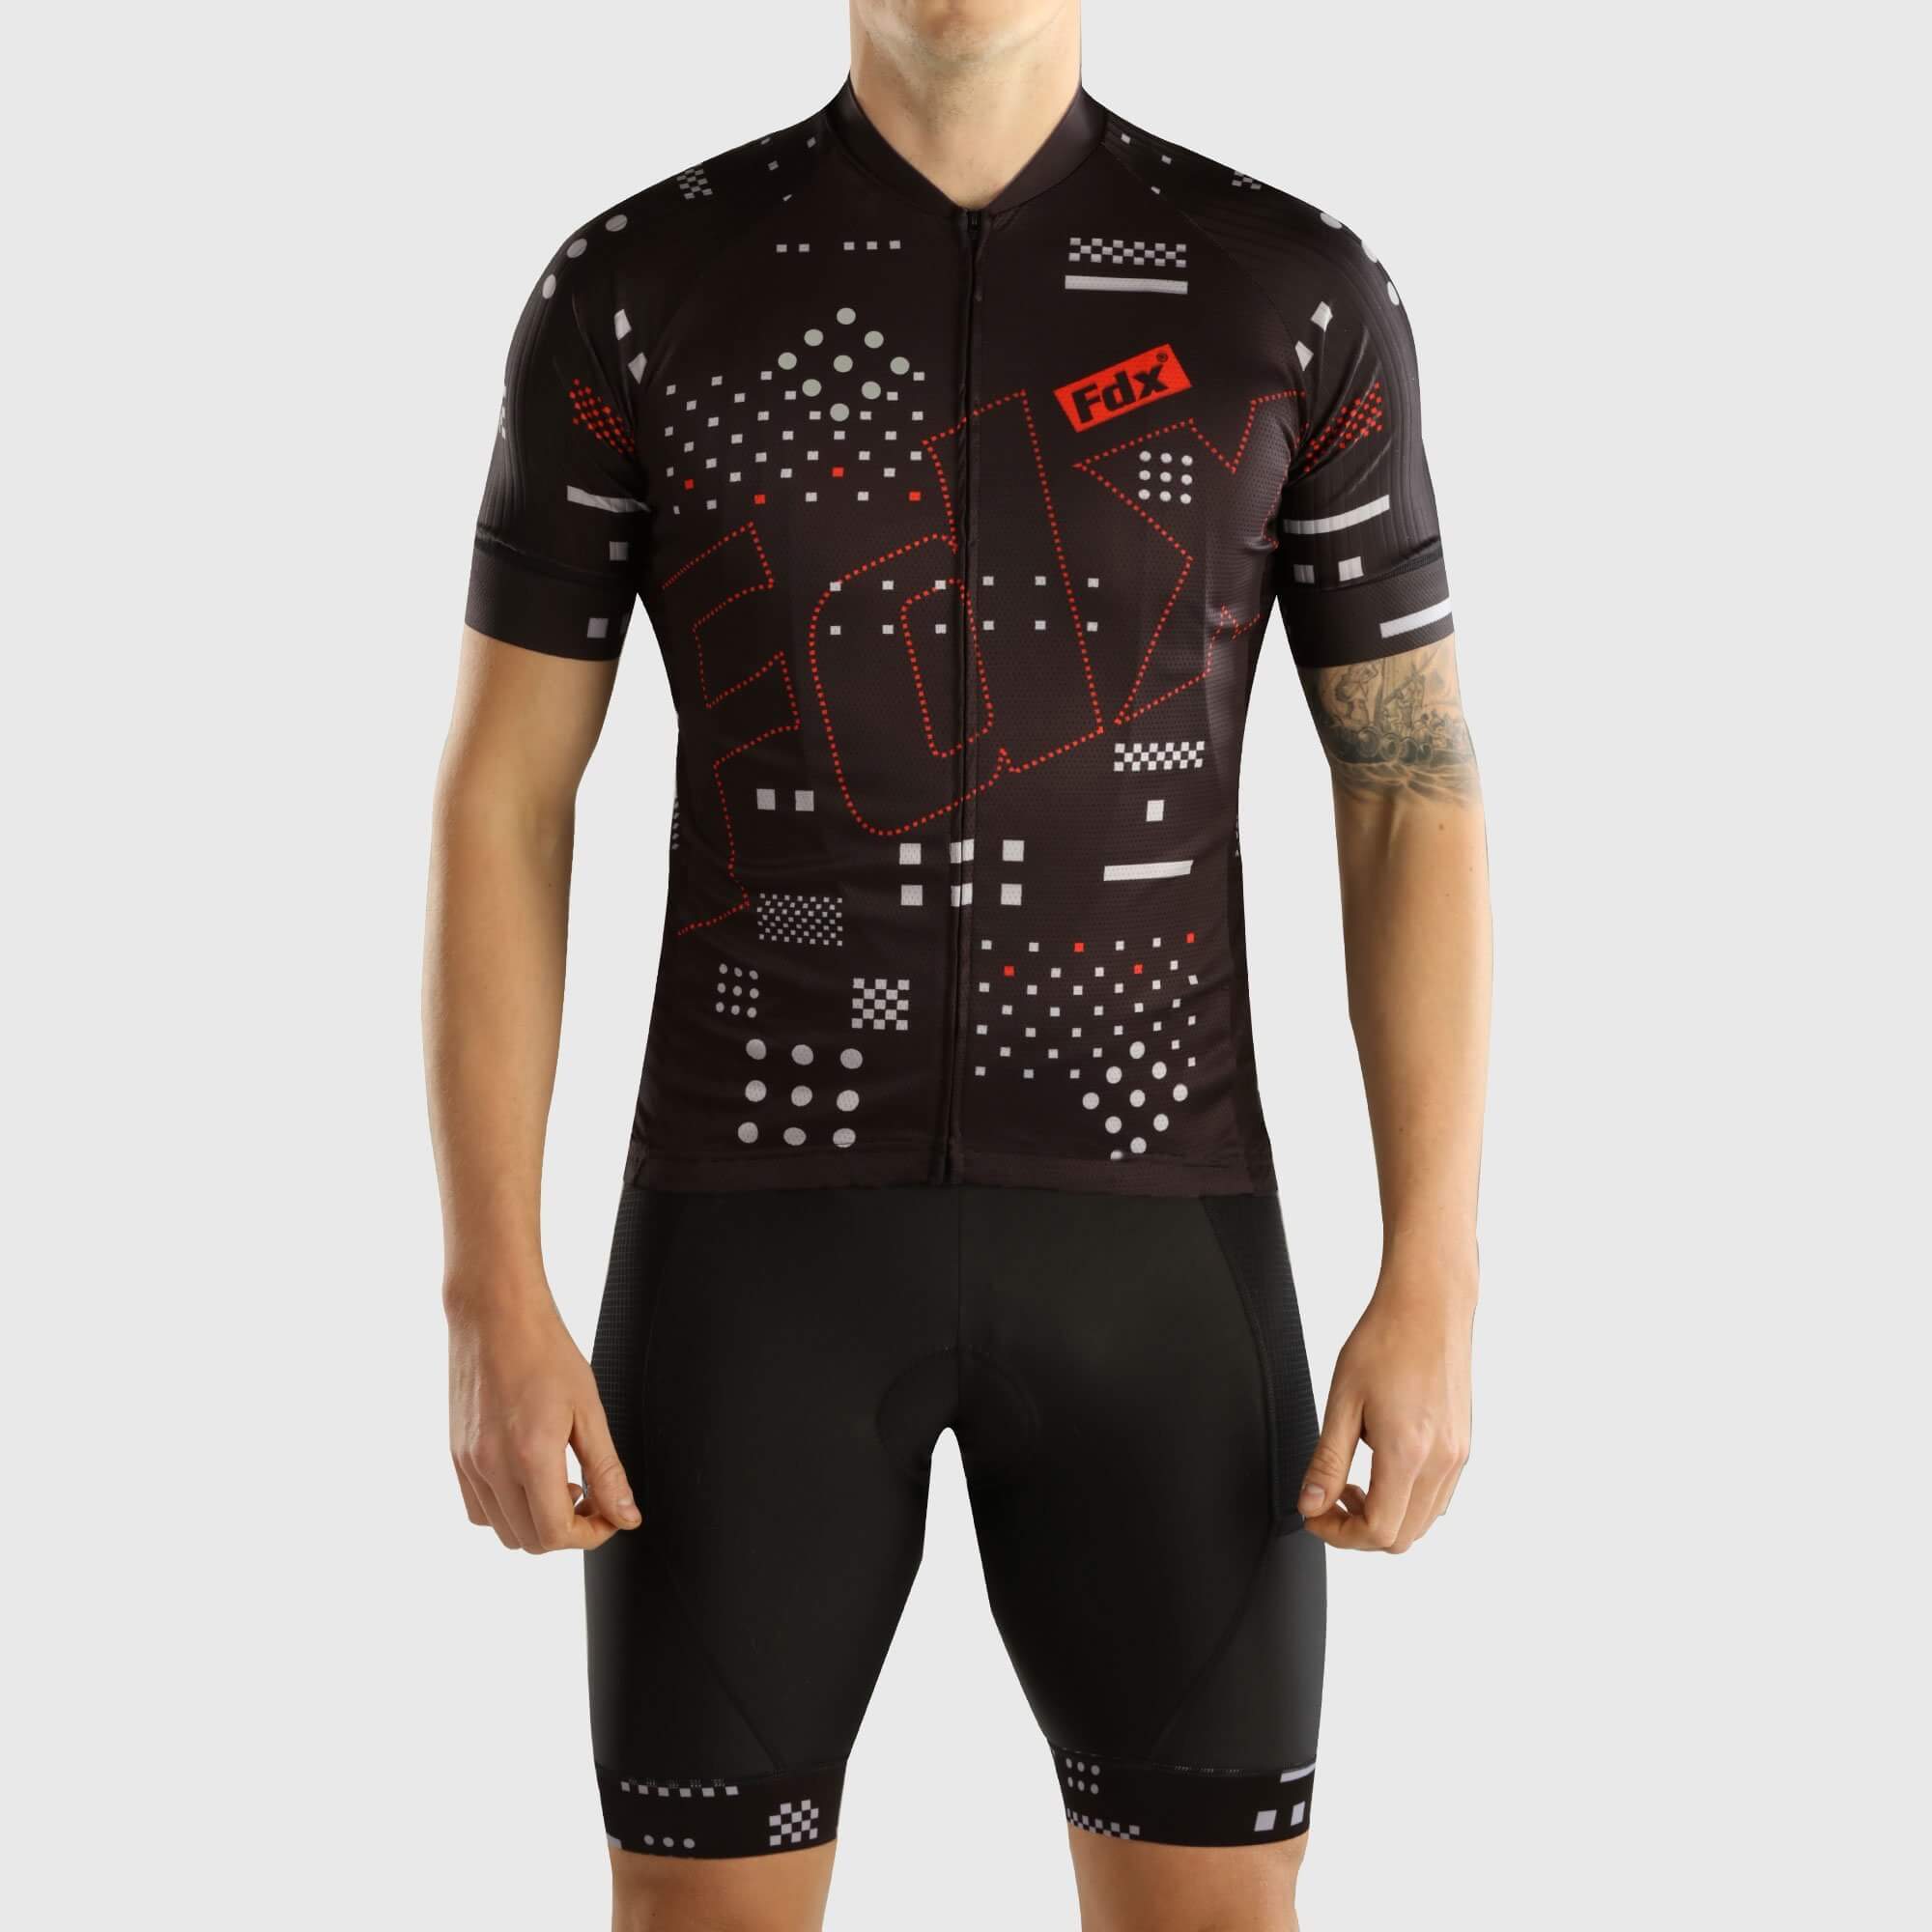 Fdx Mens Red Black Sleeve Cycling Jersey & Gel Padded Bib Shorts Best Summer Road Bike Wear Light Weight, Hi-viz Reflectors & Pockets - All Day